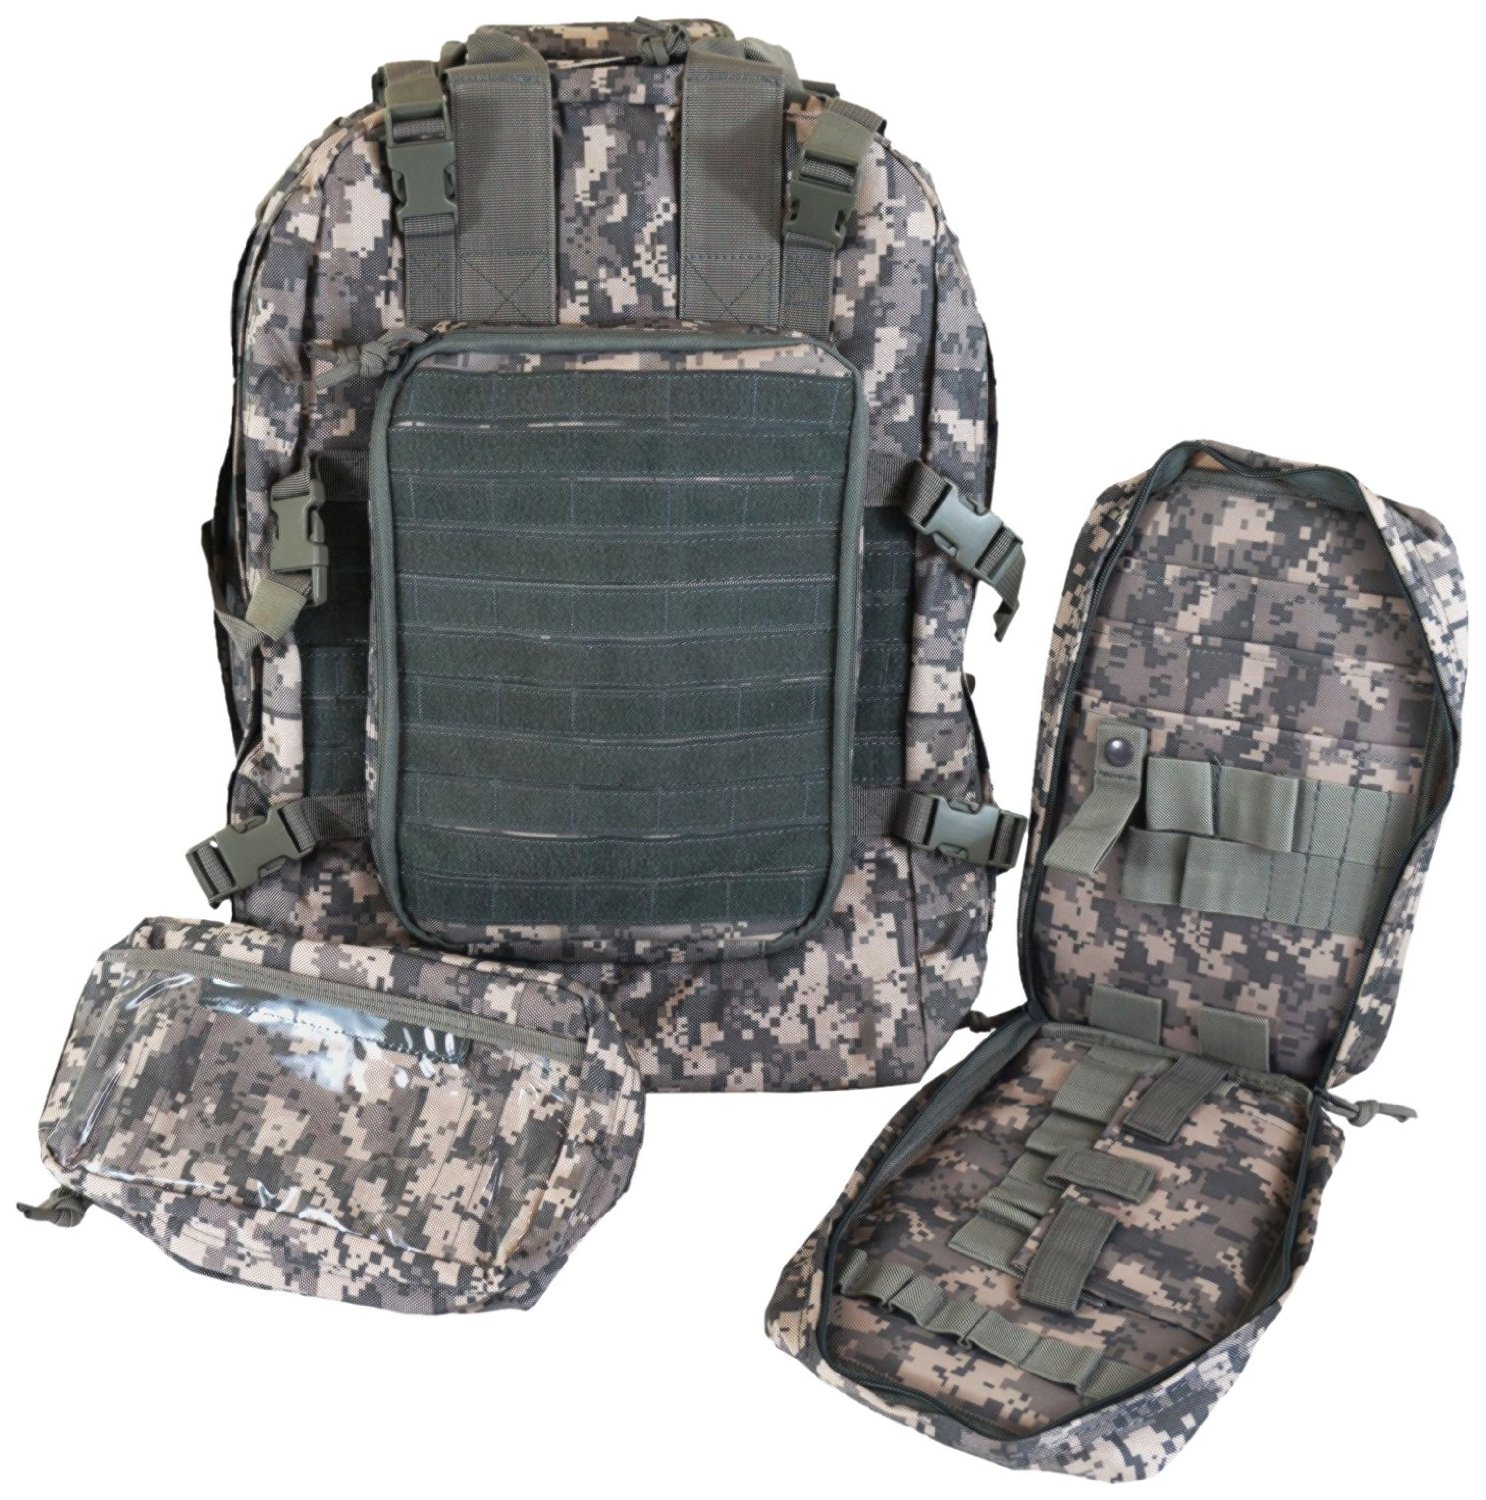 M2 Explorer MINI-HOSPITAL BACKPACK Deluxe Huge Military Corpsman Medic Hospital Tactical Backpack, 20 x 13 x 6-Inch